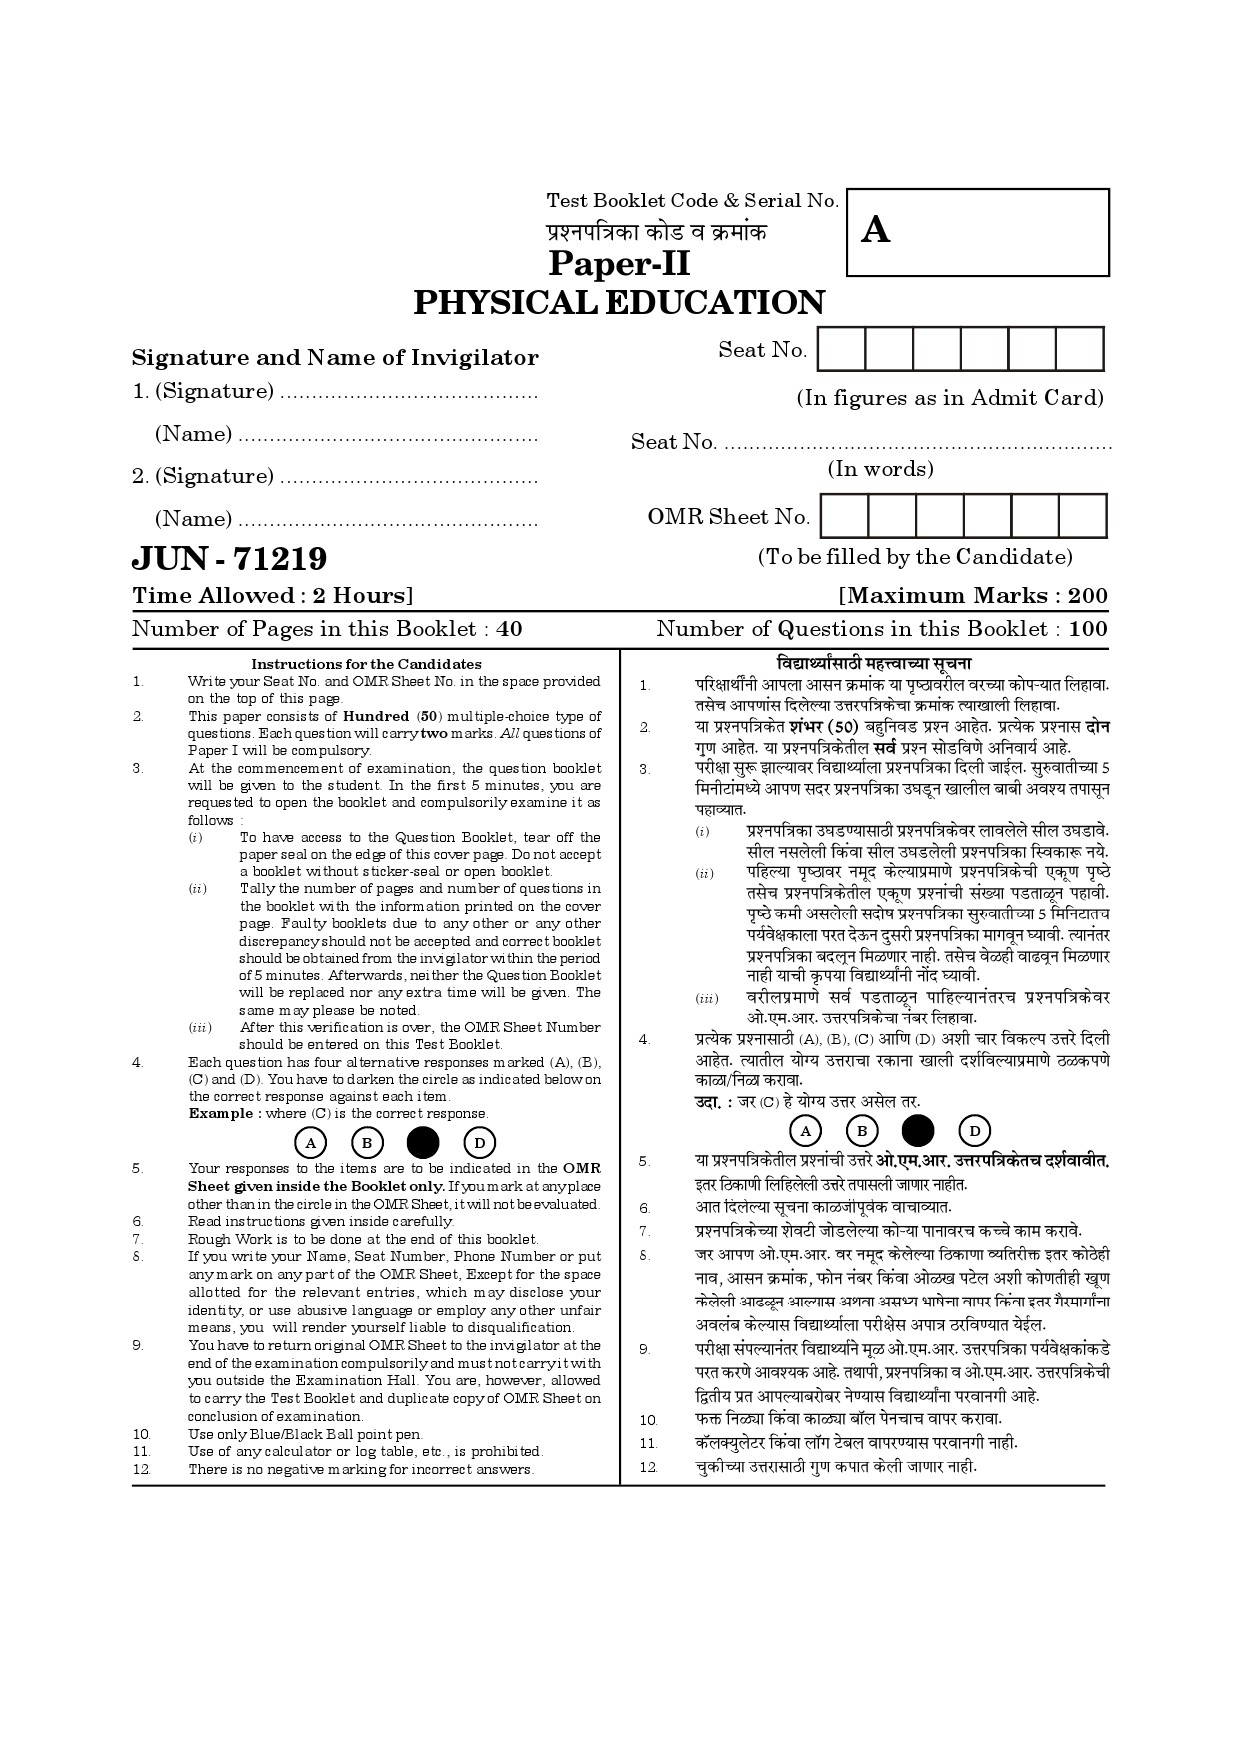 Maharashtra SET Physical Education Question Paper II June 2019 1